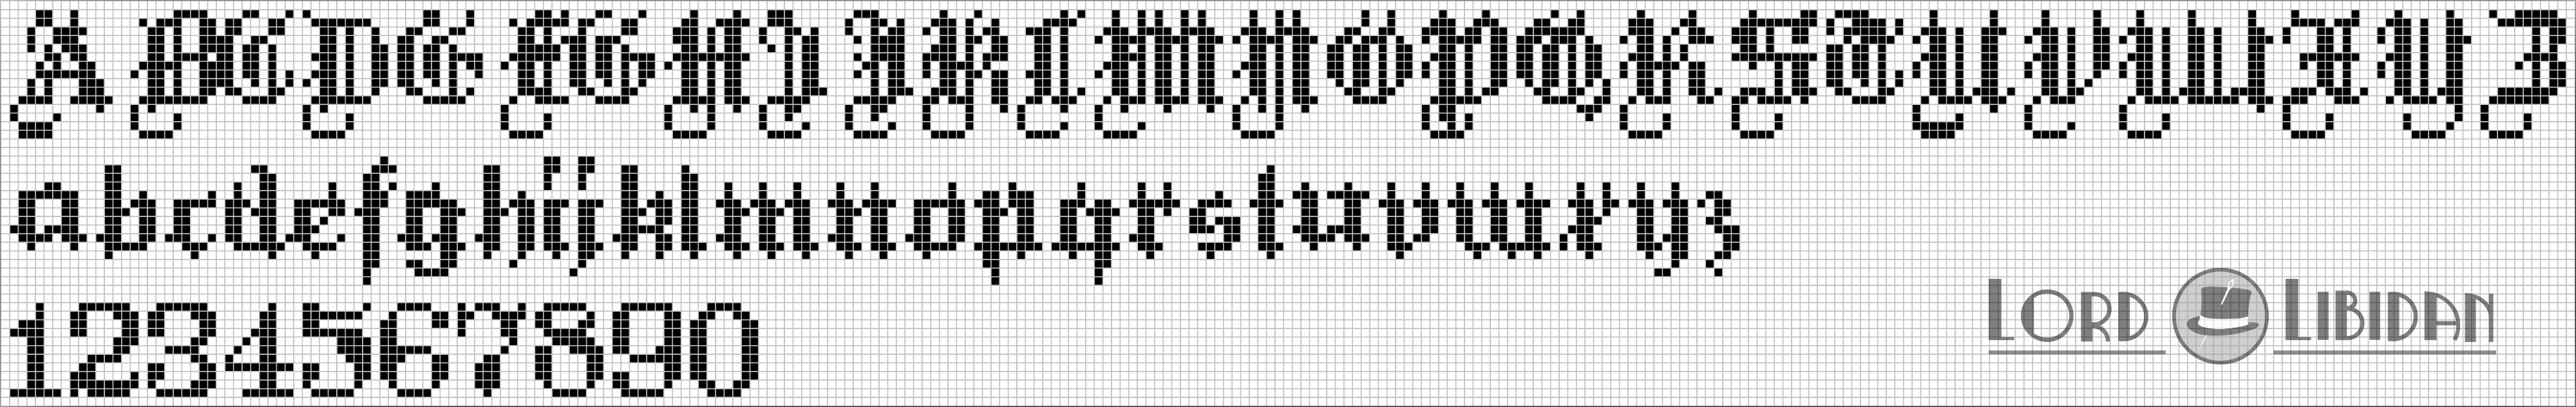 Ye Olde Cross Stitch Alphabet Pattern Free Download by Lord Libidan